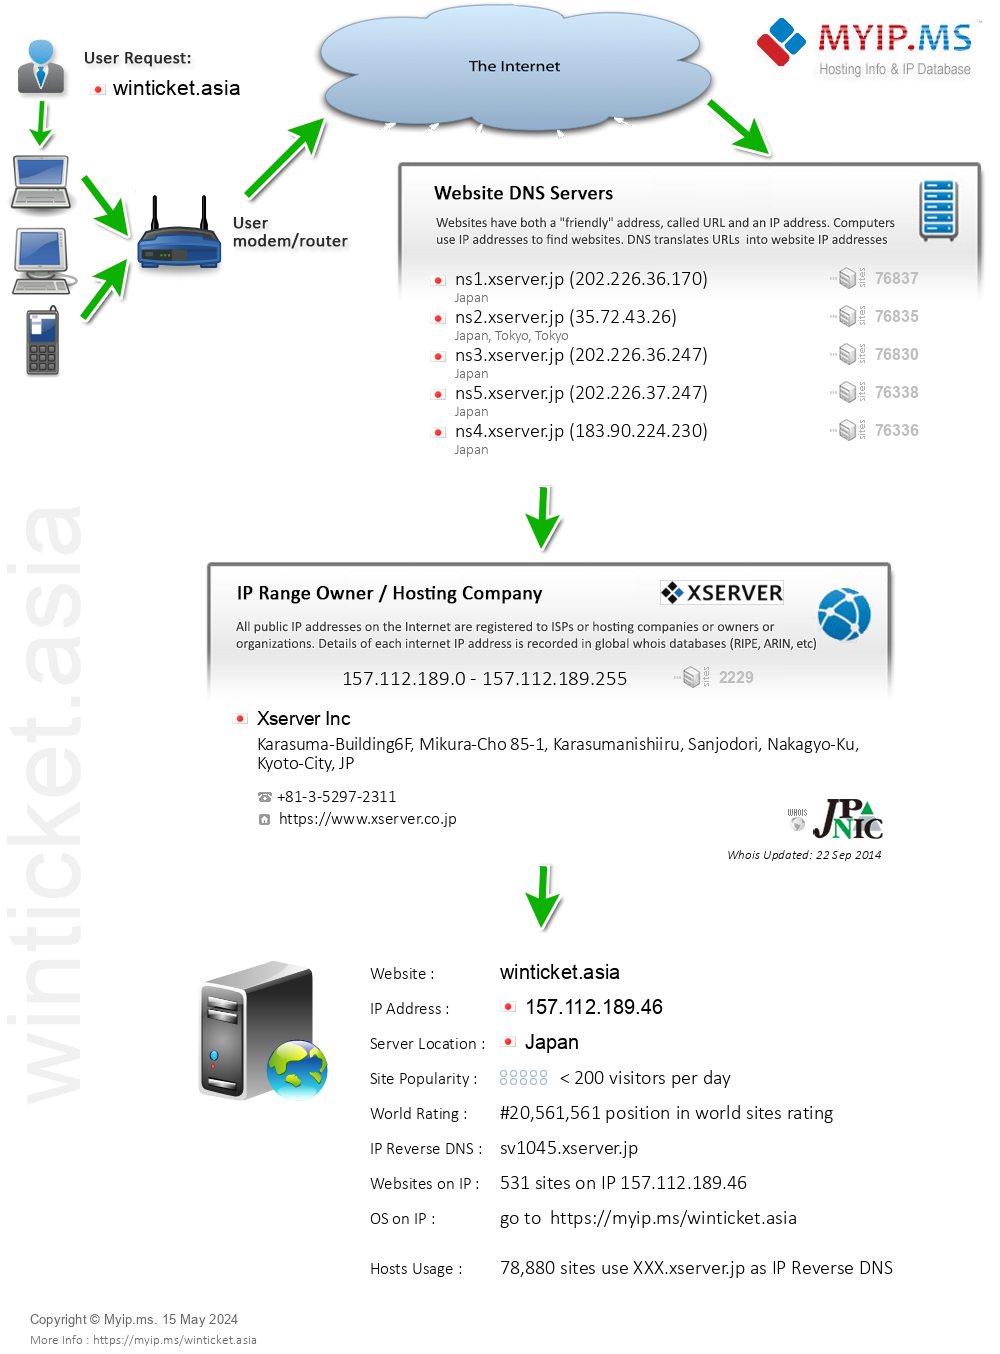 Winticket.asia - Website Hosting Visual IP Diagram